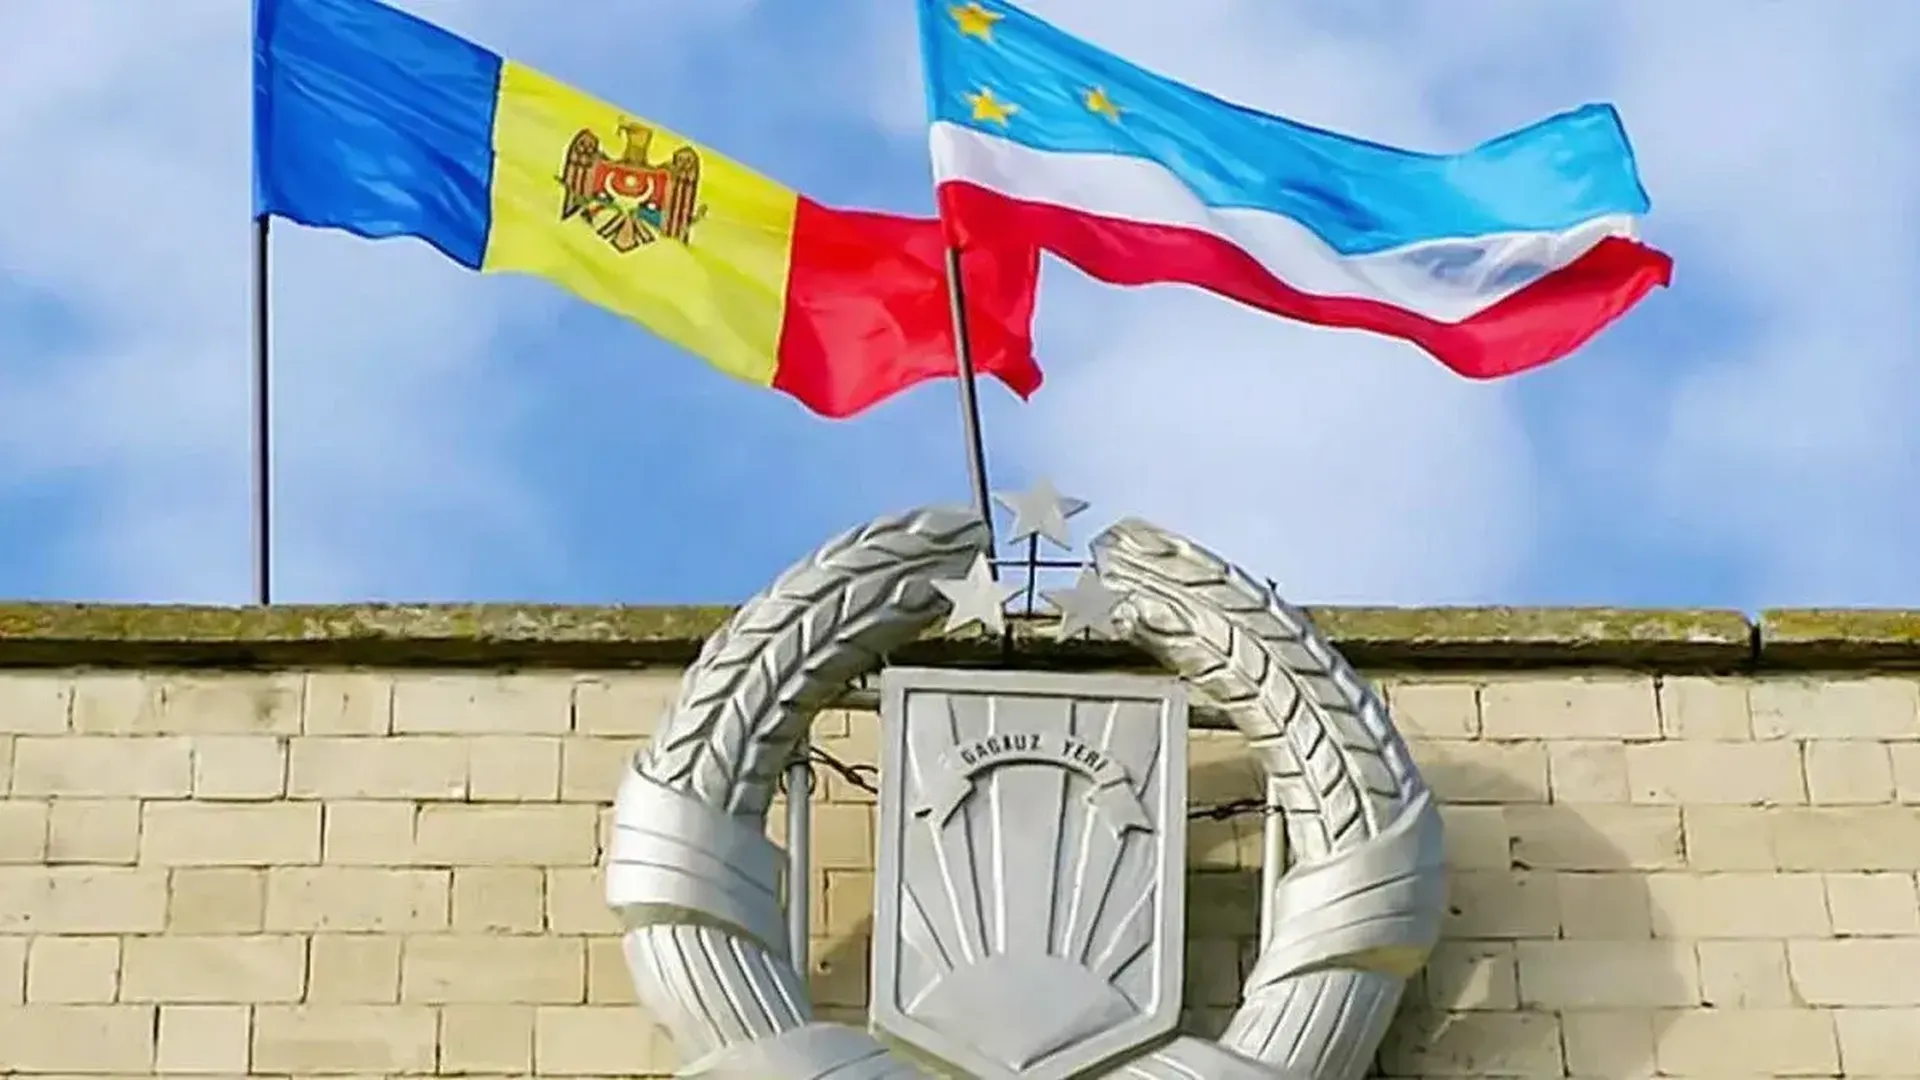 Гагаузия флаг. Гагаузской автономии Молдавии. Гагаузия и Молдова флаги. Флаг и герб Гагаузии.